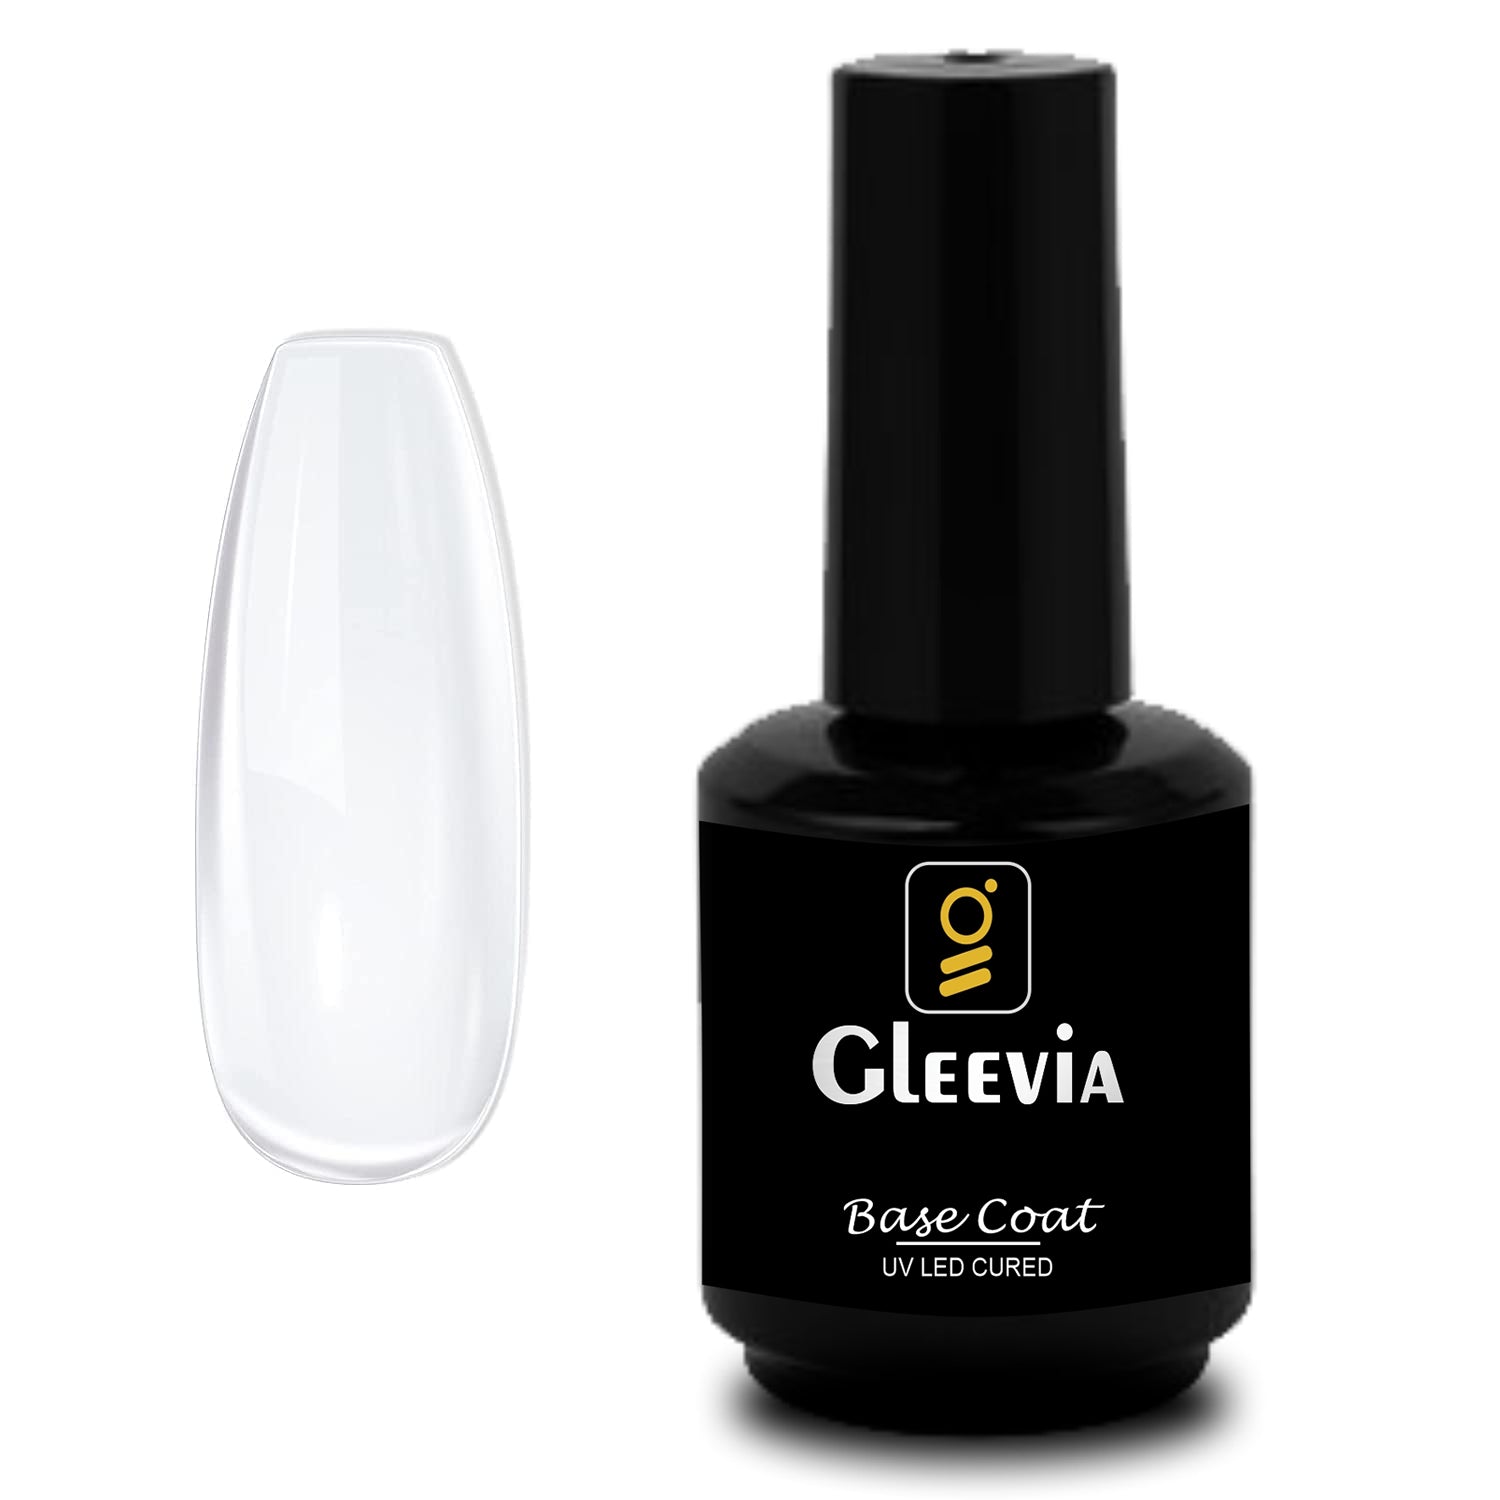 Is it okay to not use a base coat nail polish? - Quora